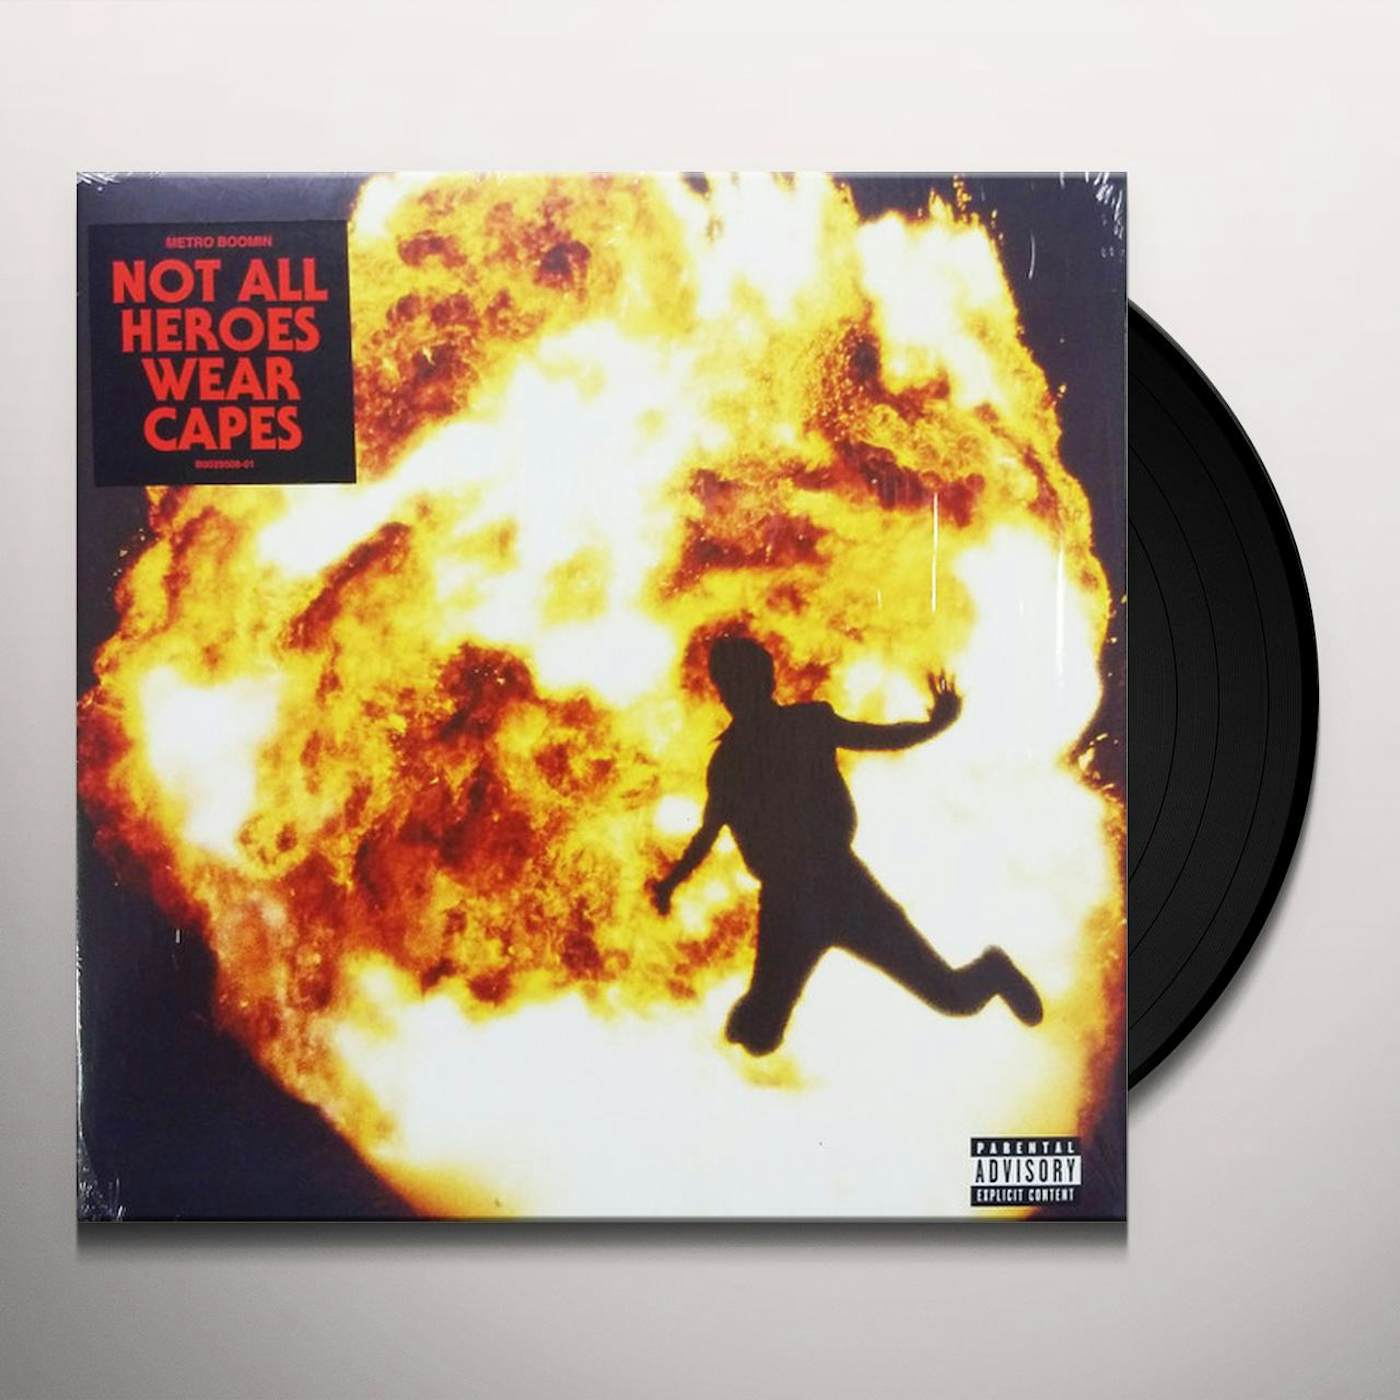 Metro NOT HEROES CAPES Vinyl Record